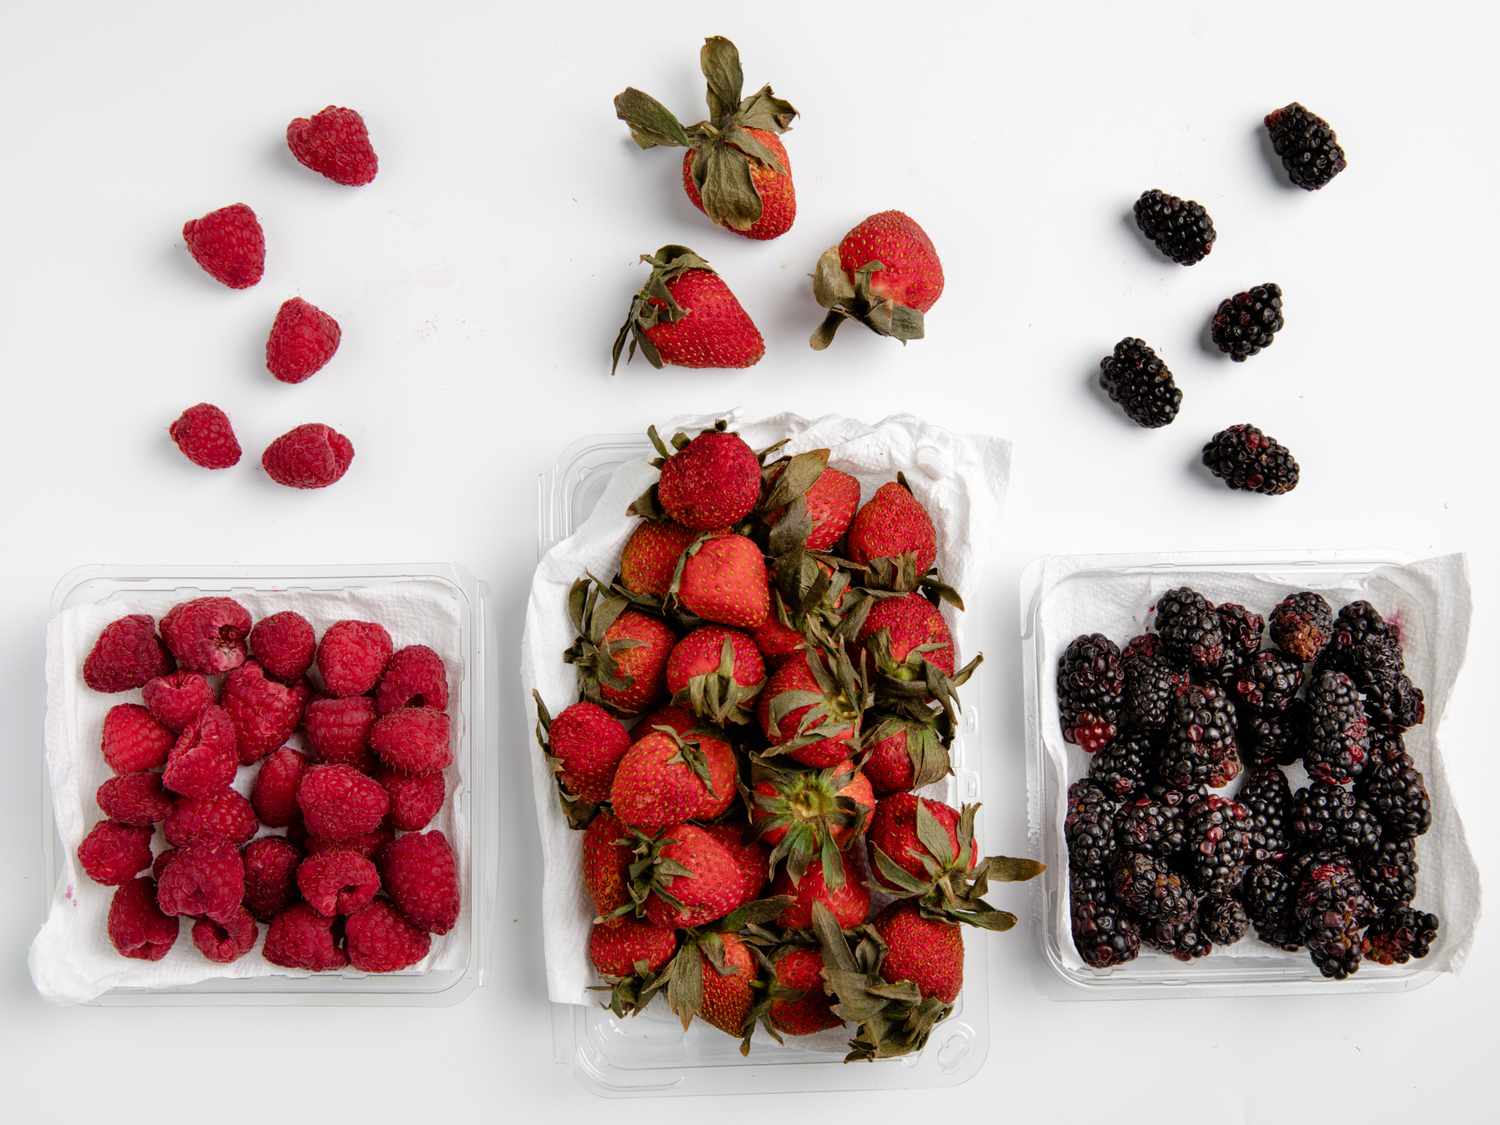 How To Store Raspberries And Blackberries